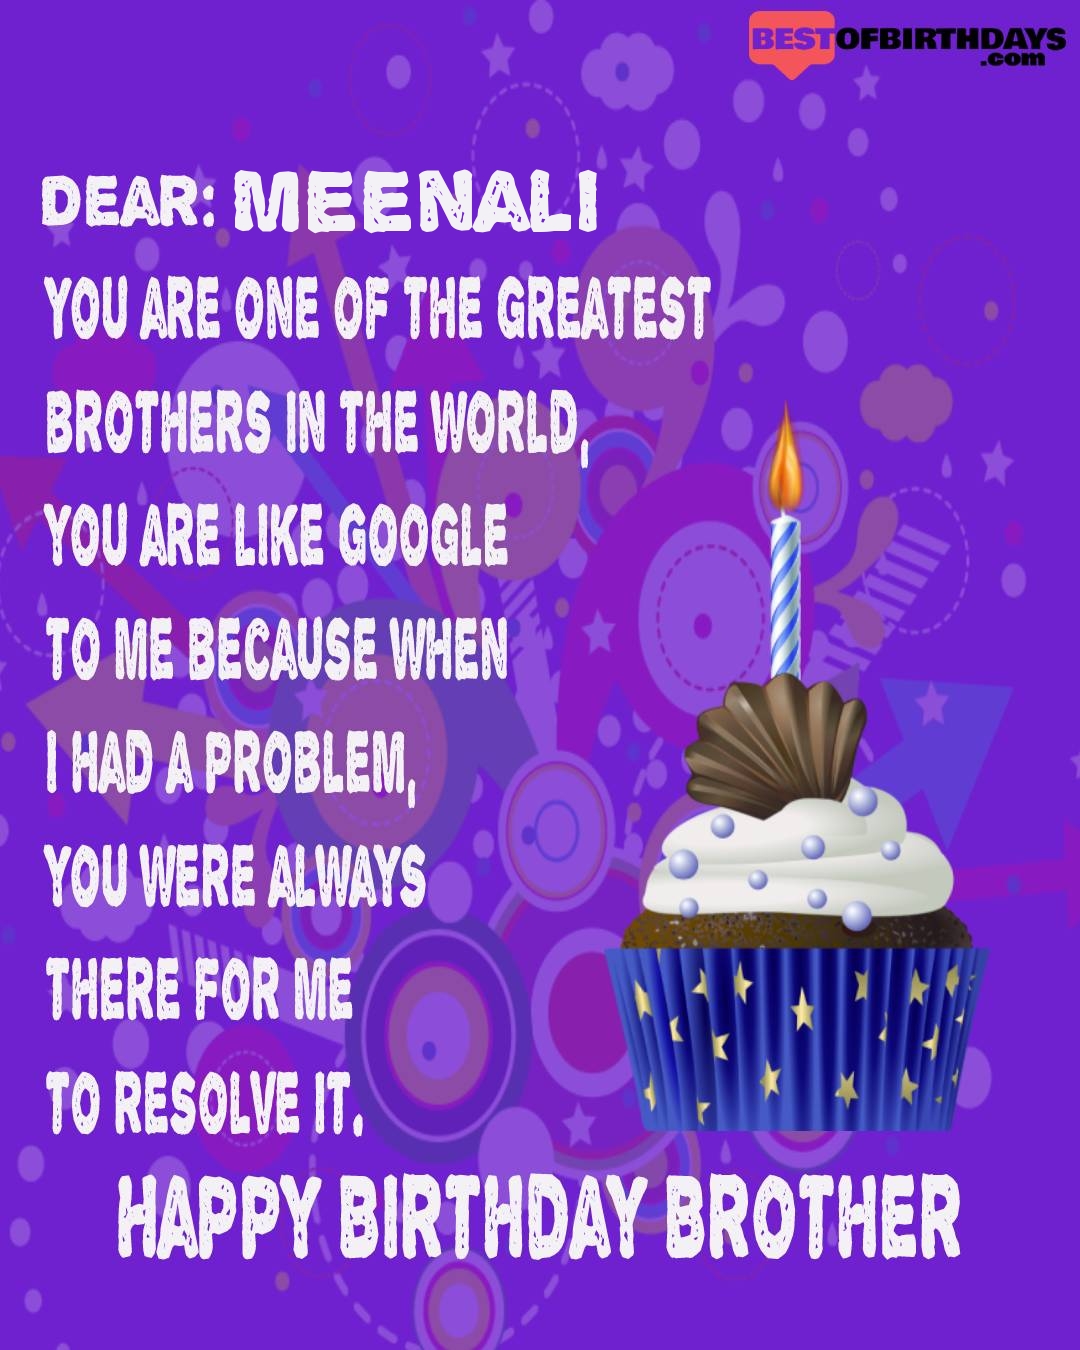 Happy birthday meenali bhai brother bro